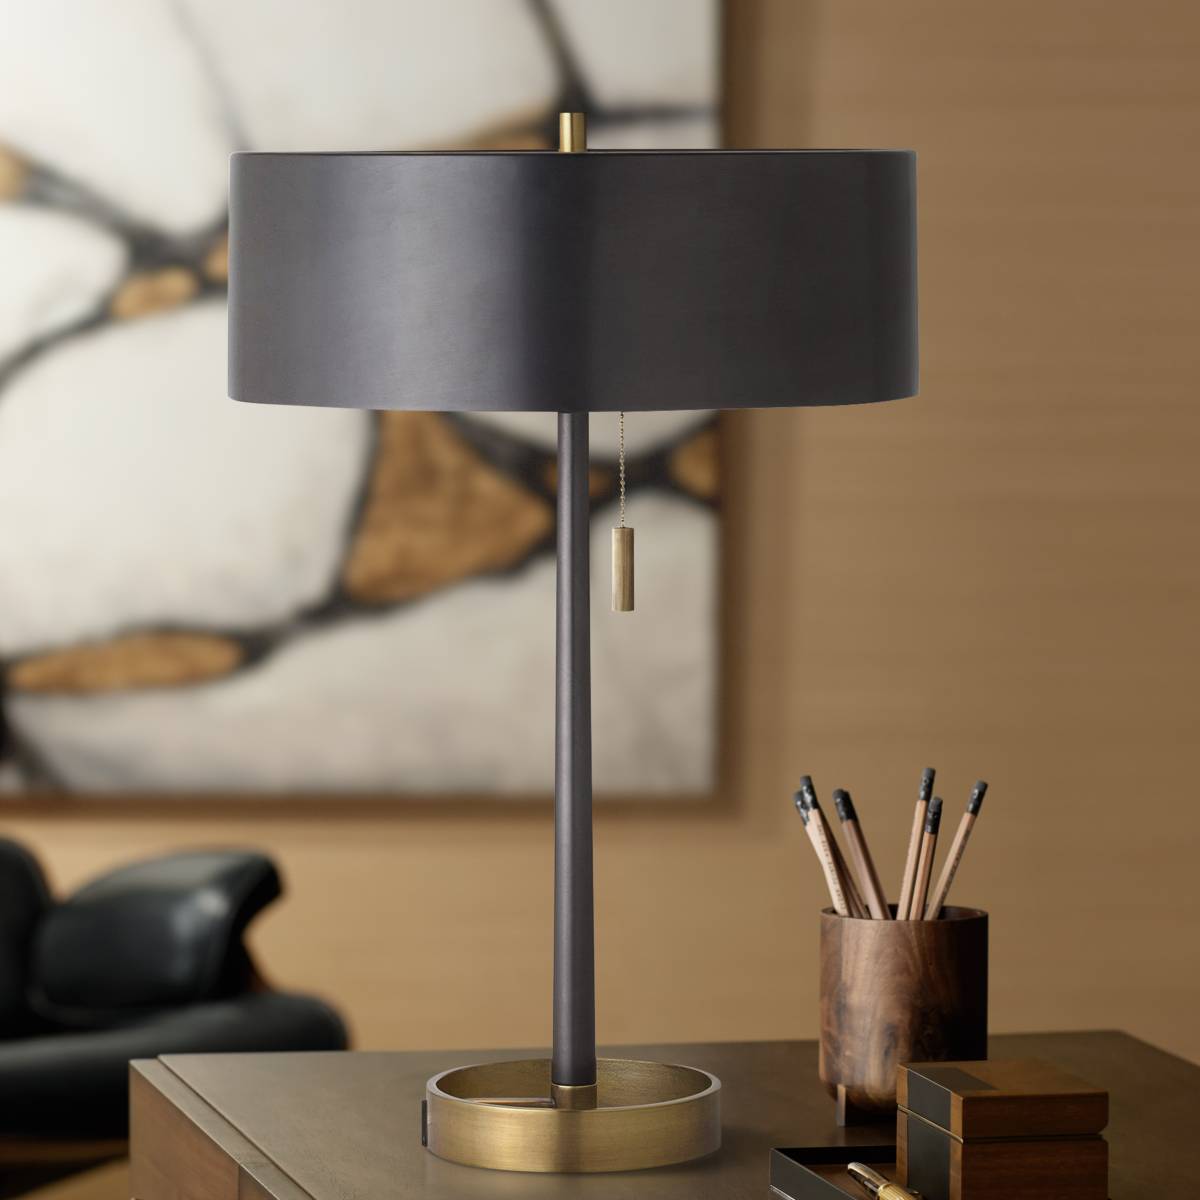 Pepin Brass Black Shade Table Lamp